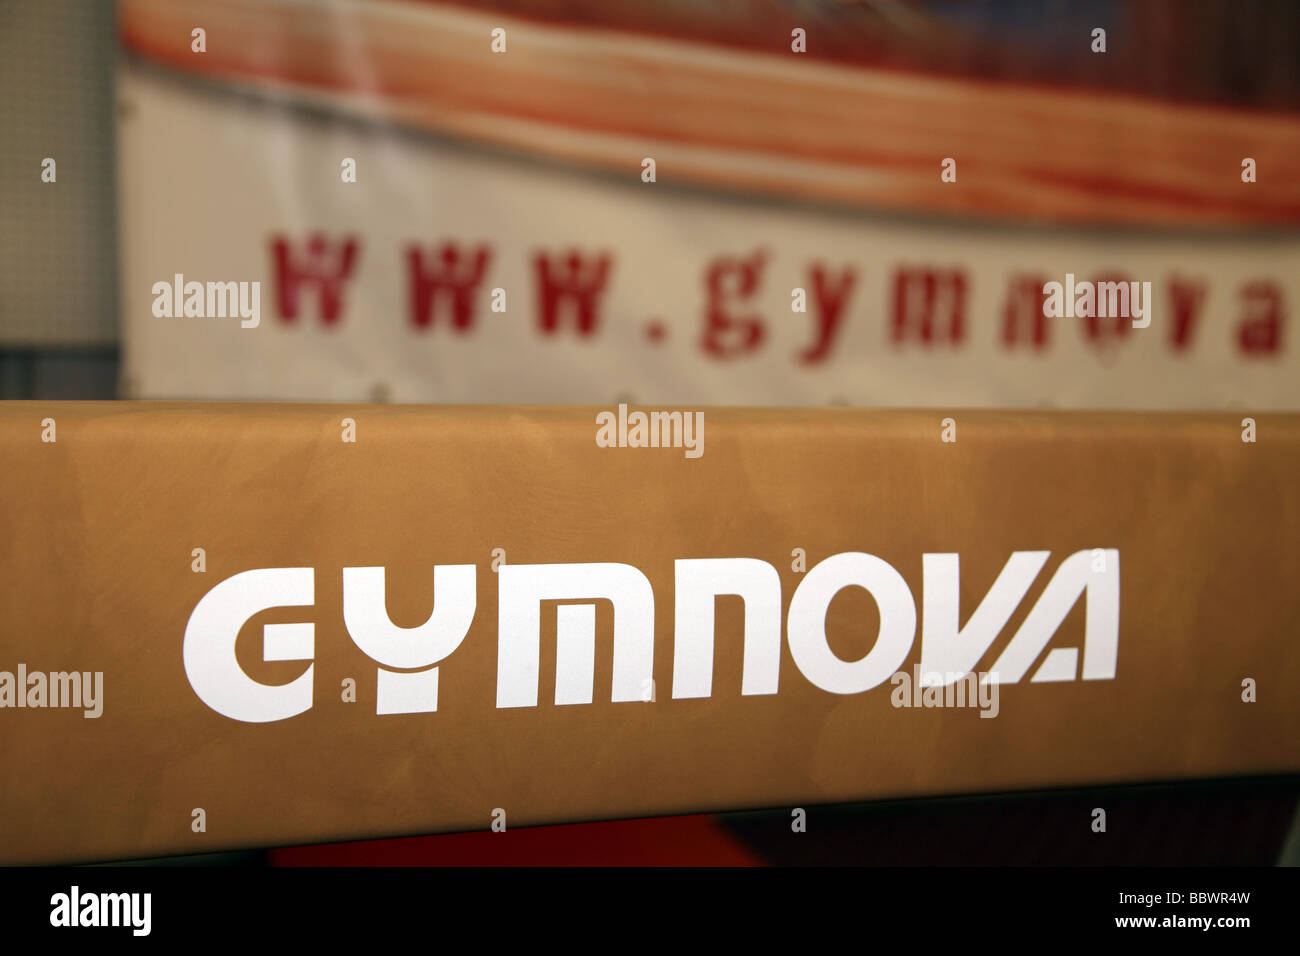 Gymnova Apparatus fro Gymnasts. Stock Photo